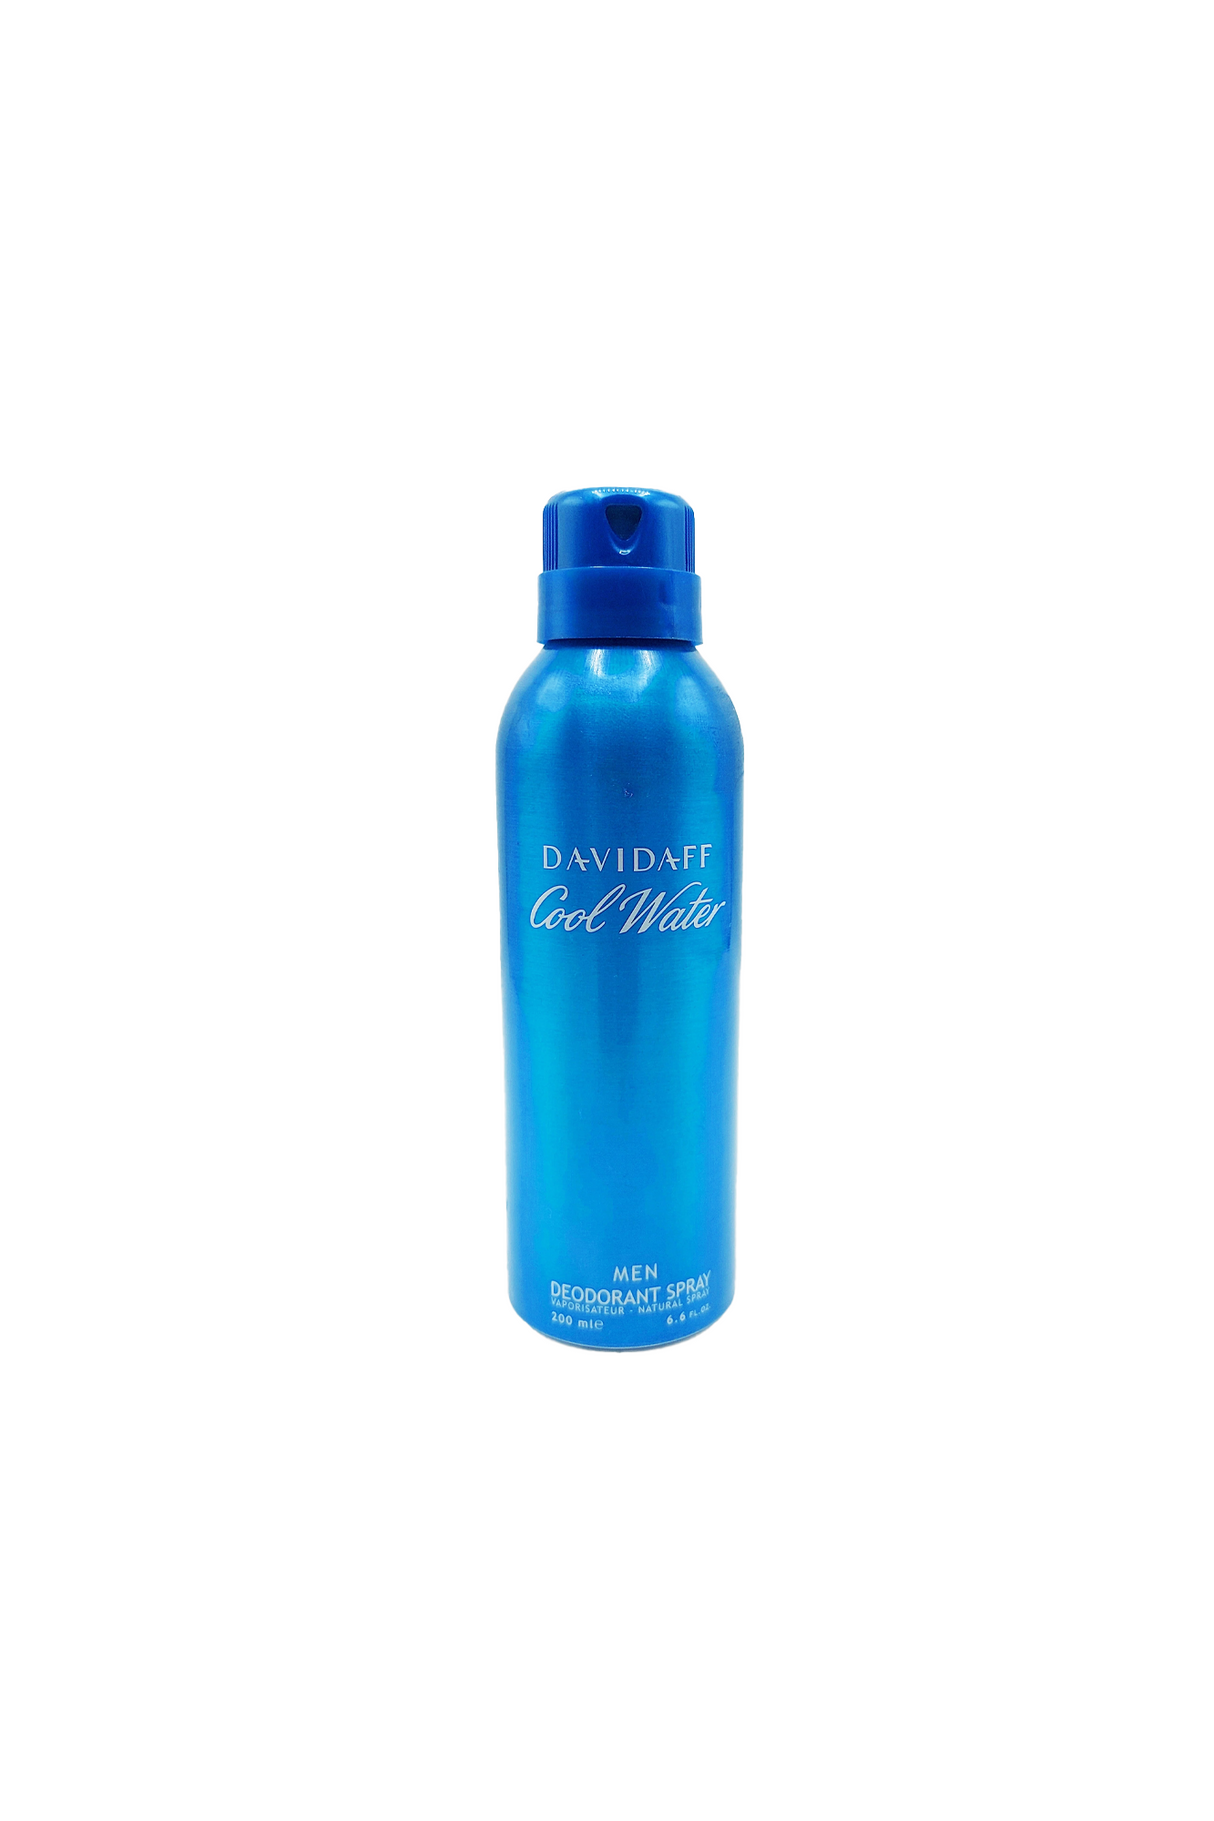 davidoff cool water deodorant body spray 200ml for men